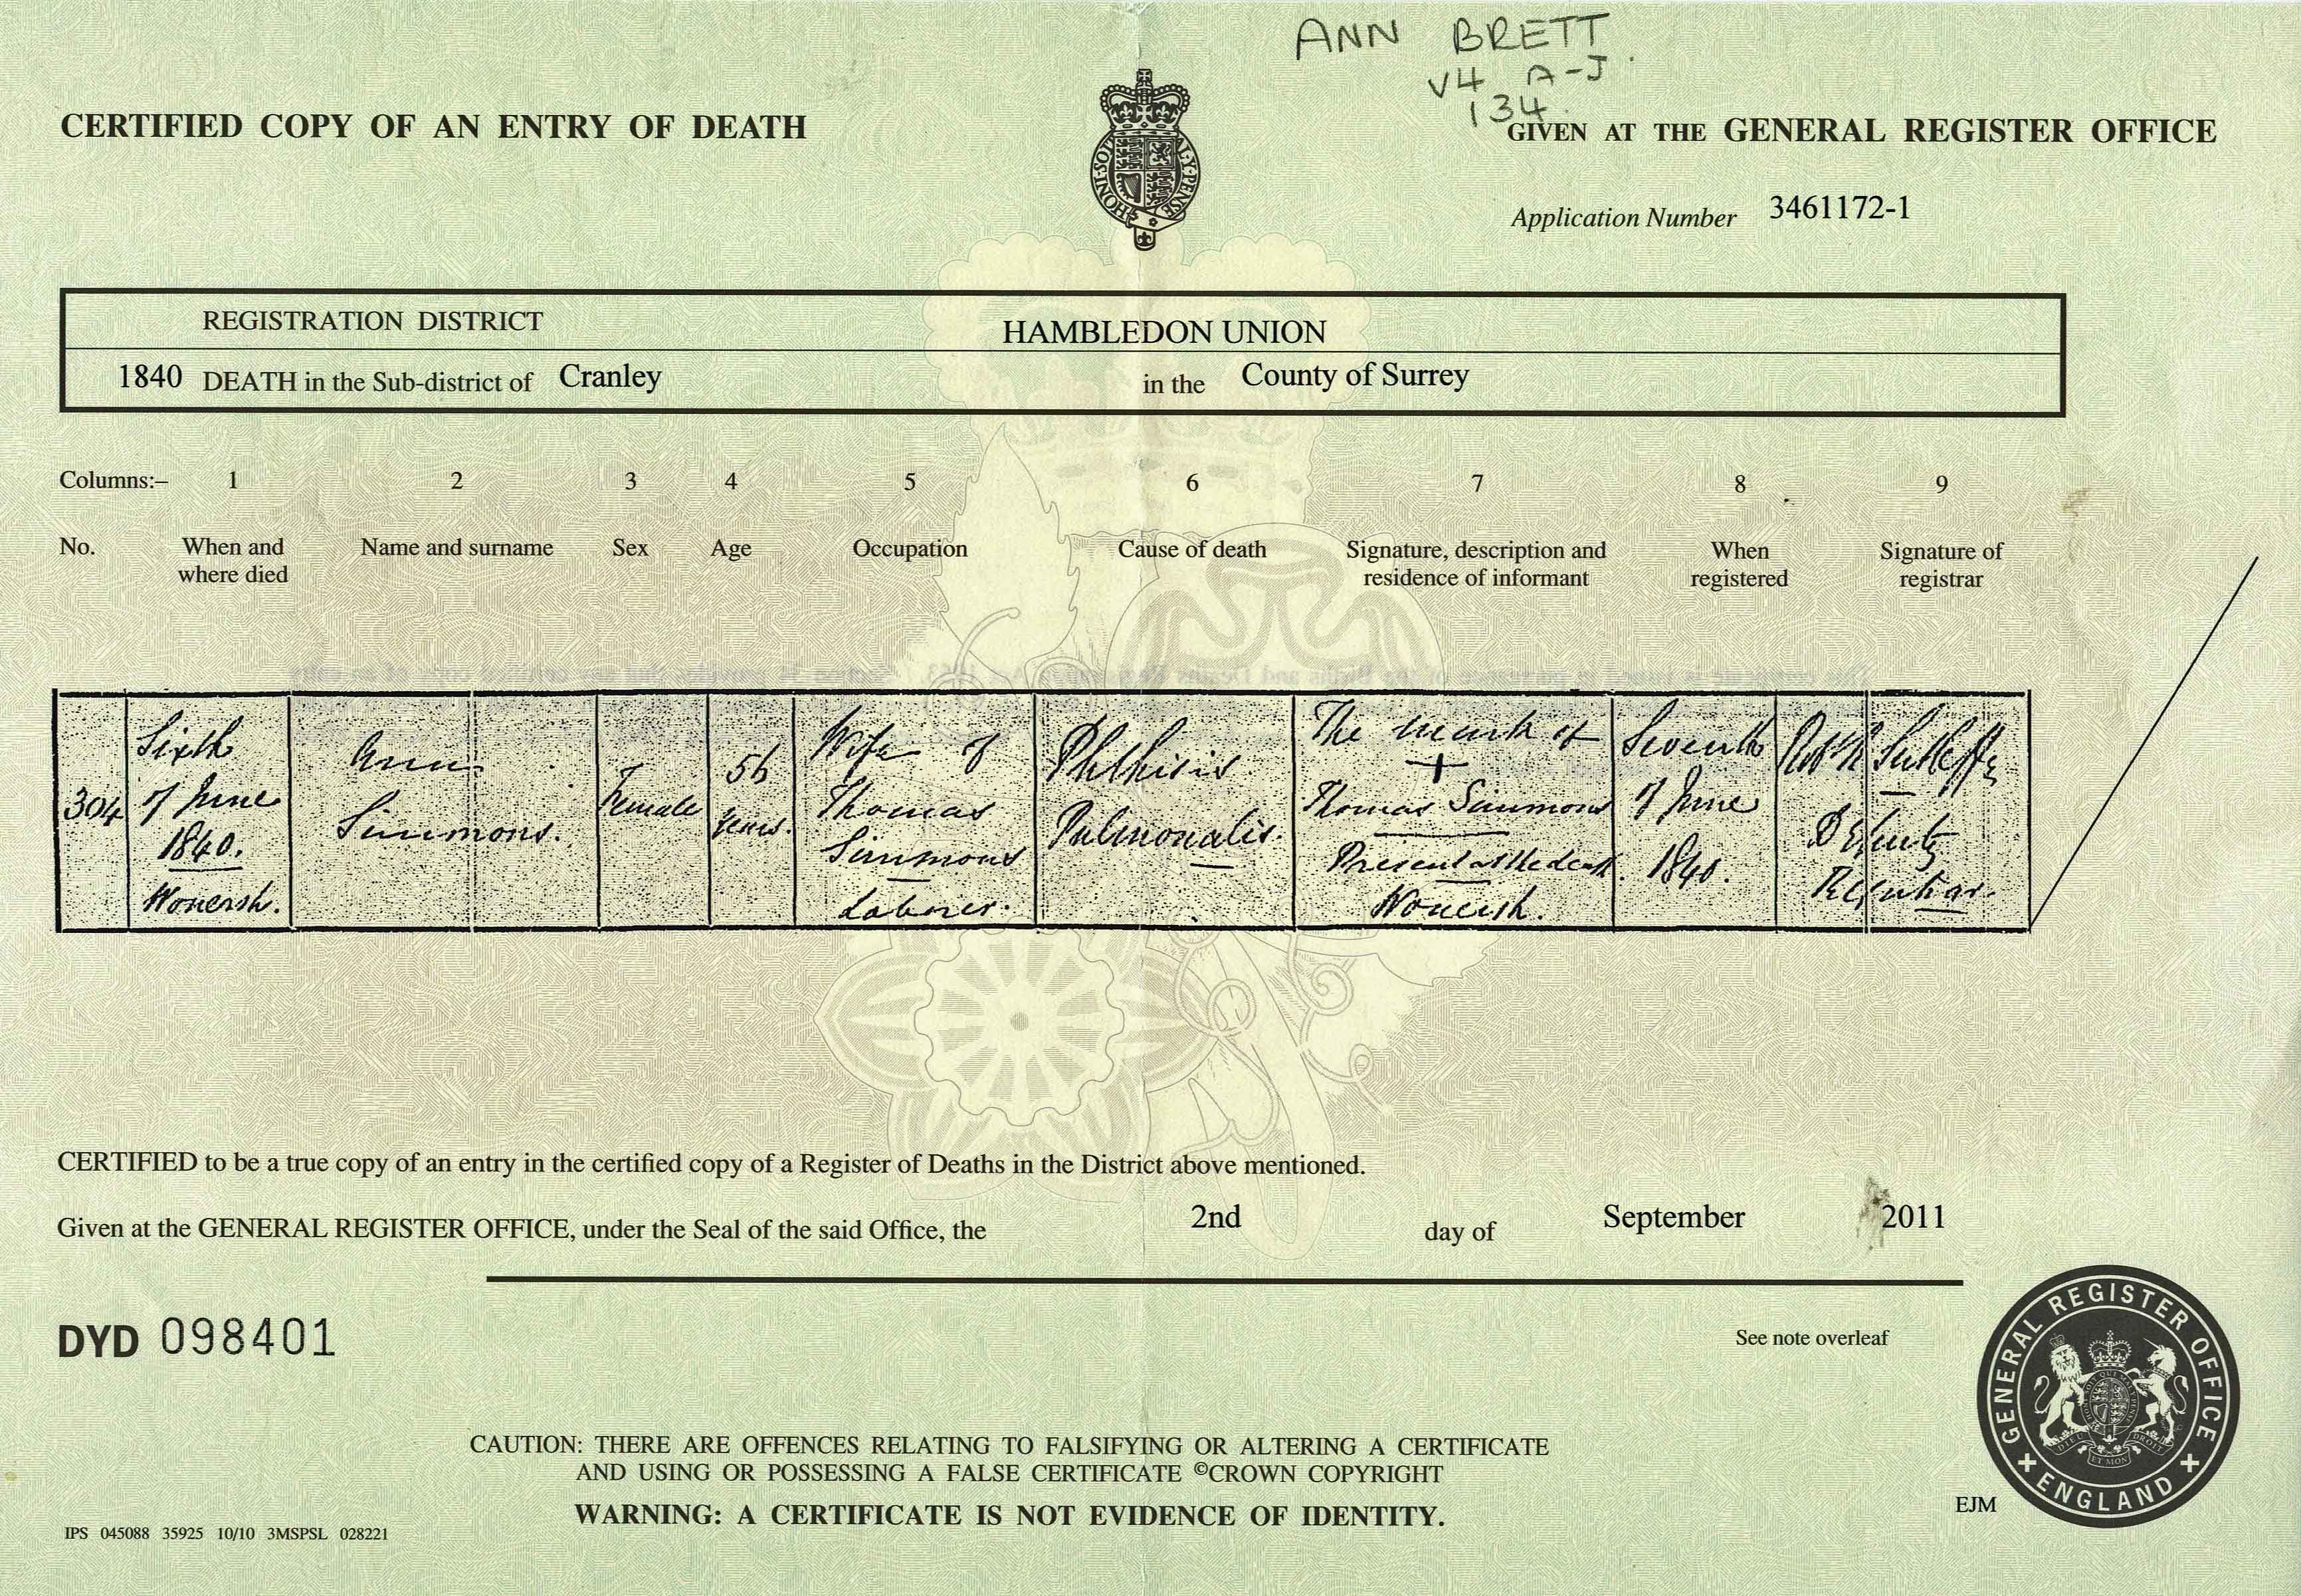 Ann Brett death certificate